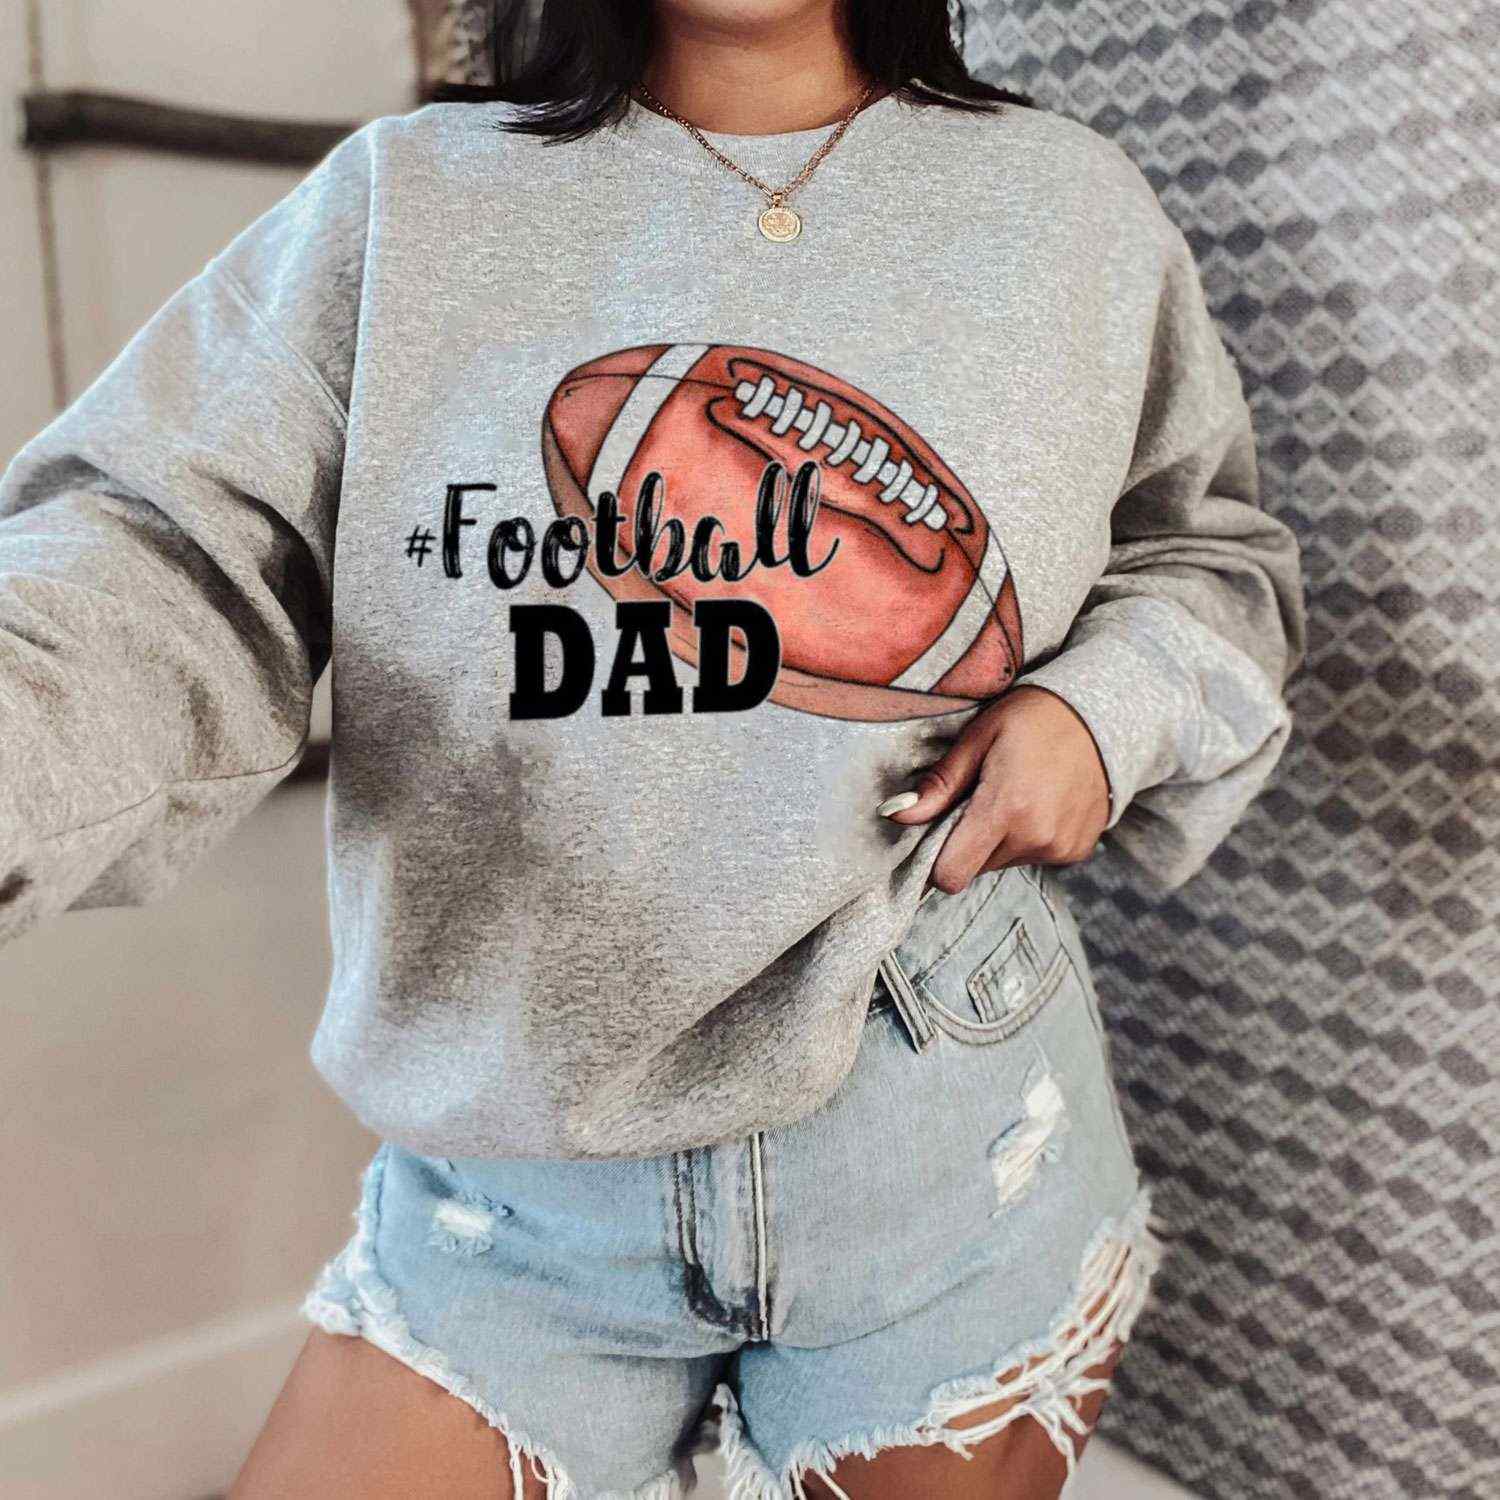 Football Dad T-shirt